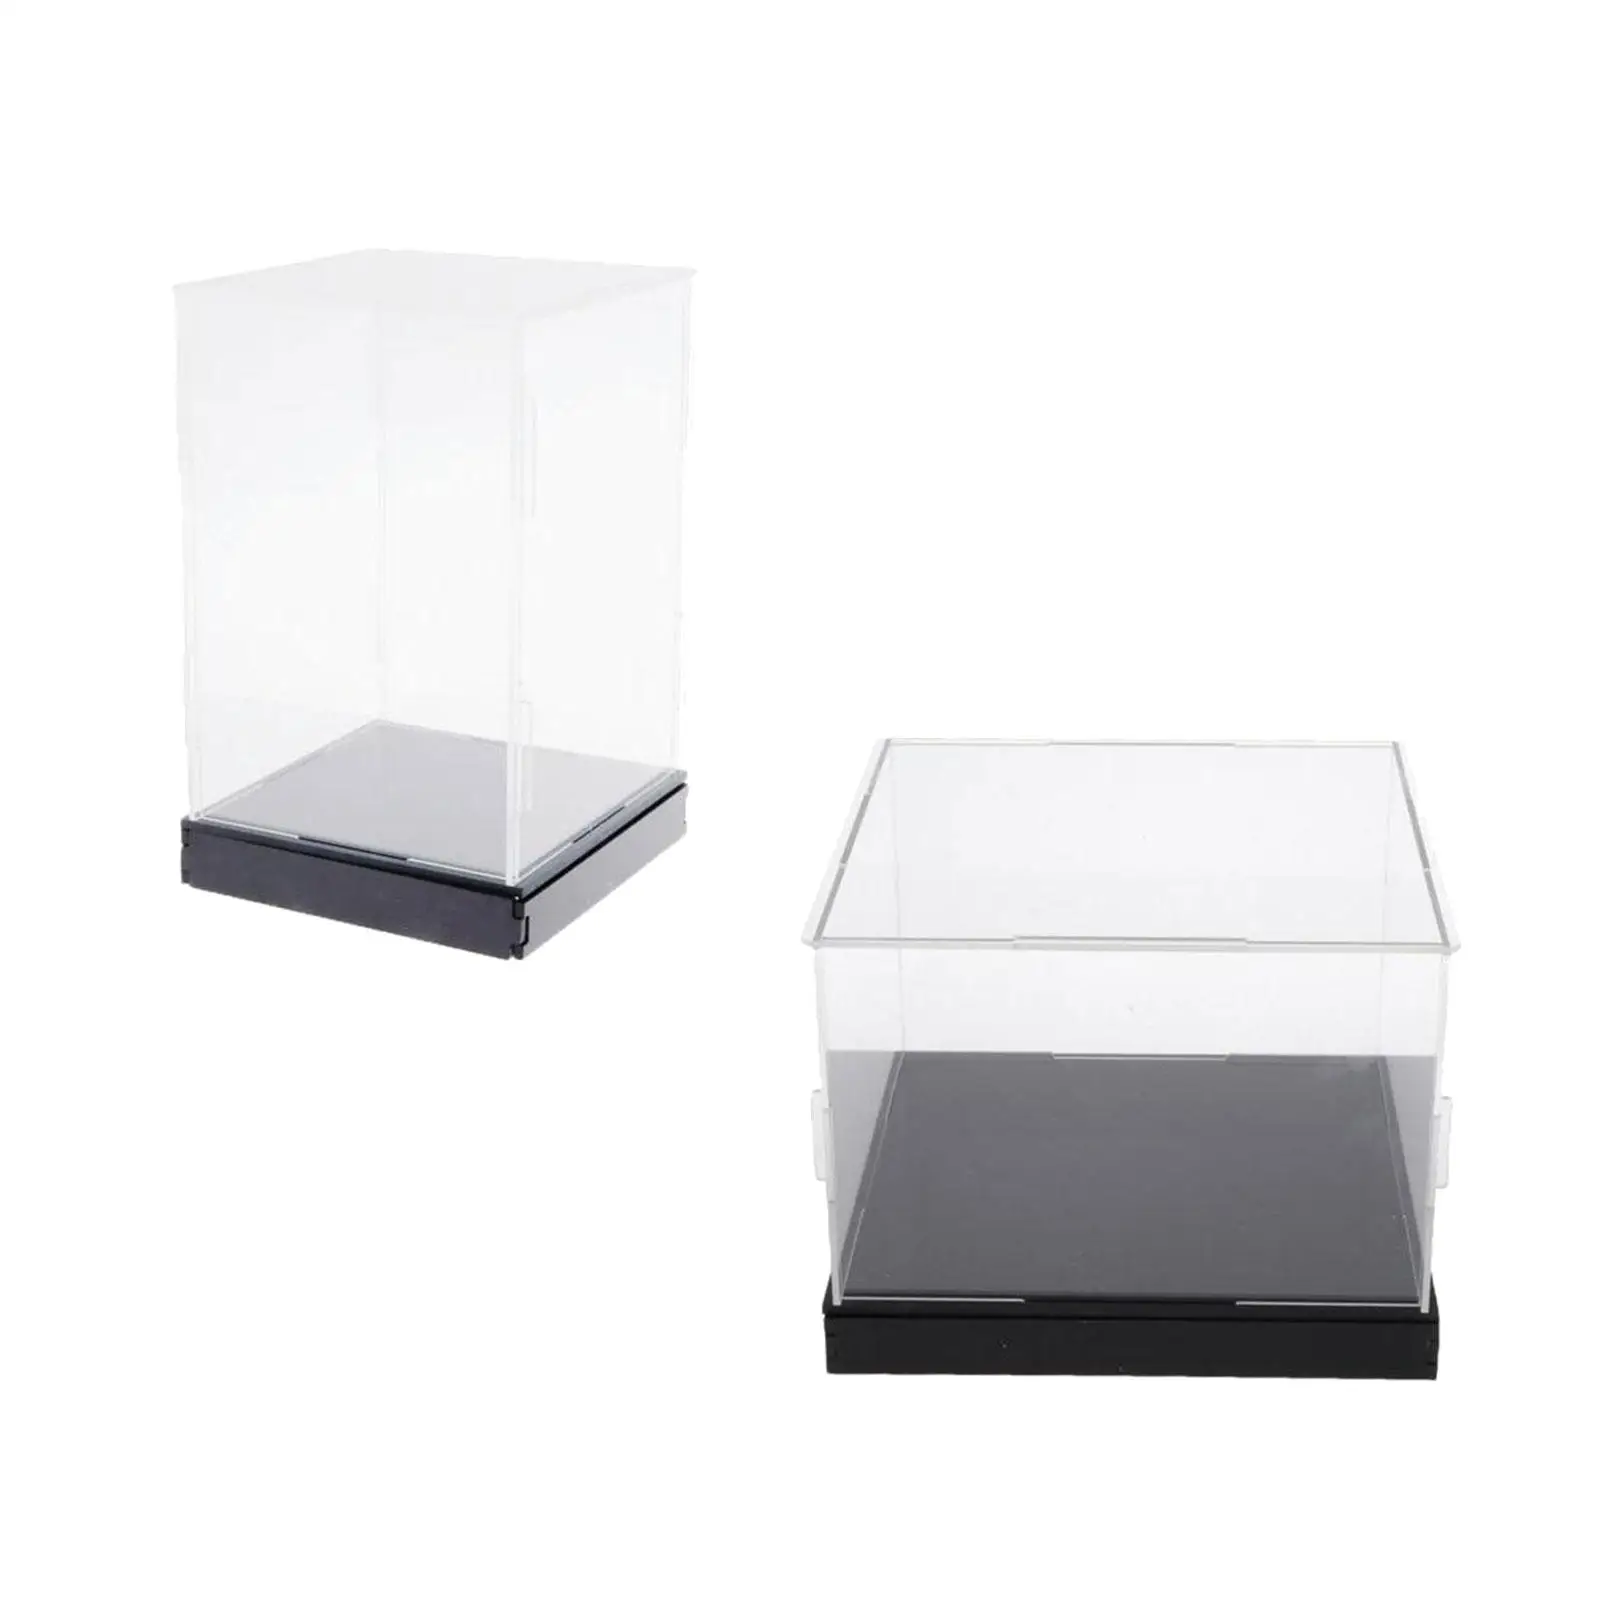 2x Clear Acrylic Display Box Dustproof Figures Toy Model Case